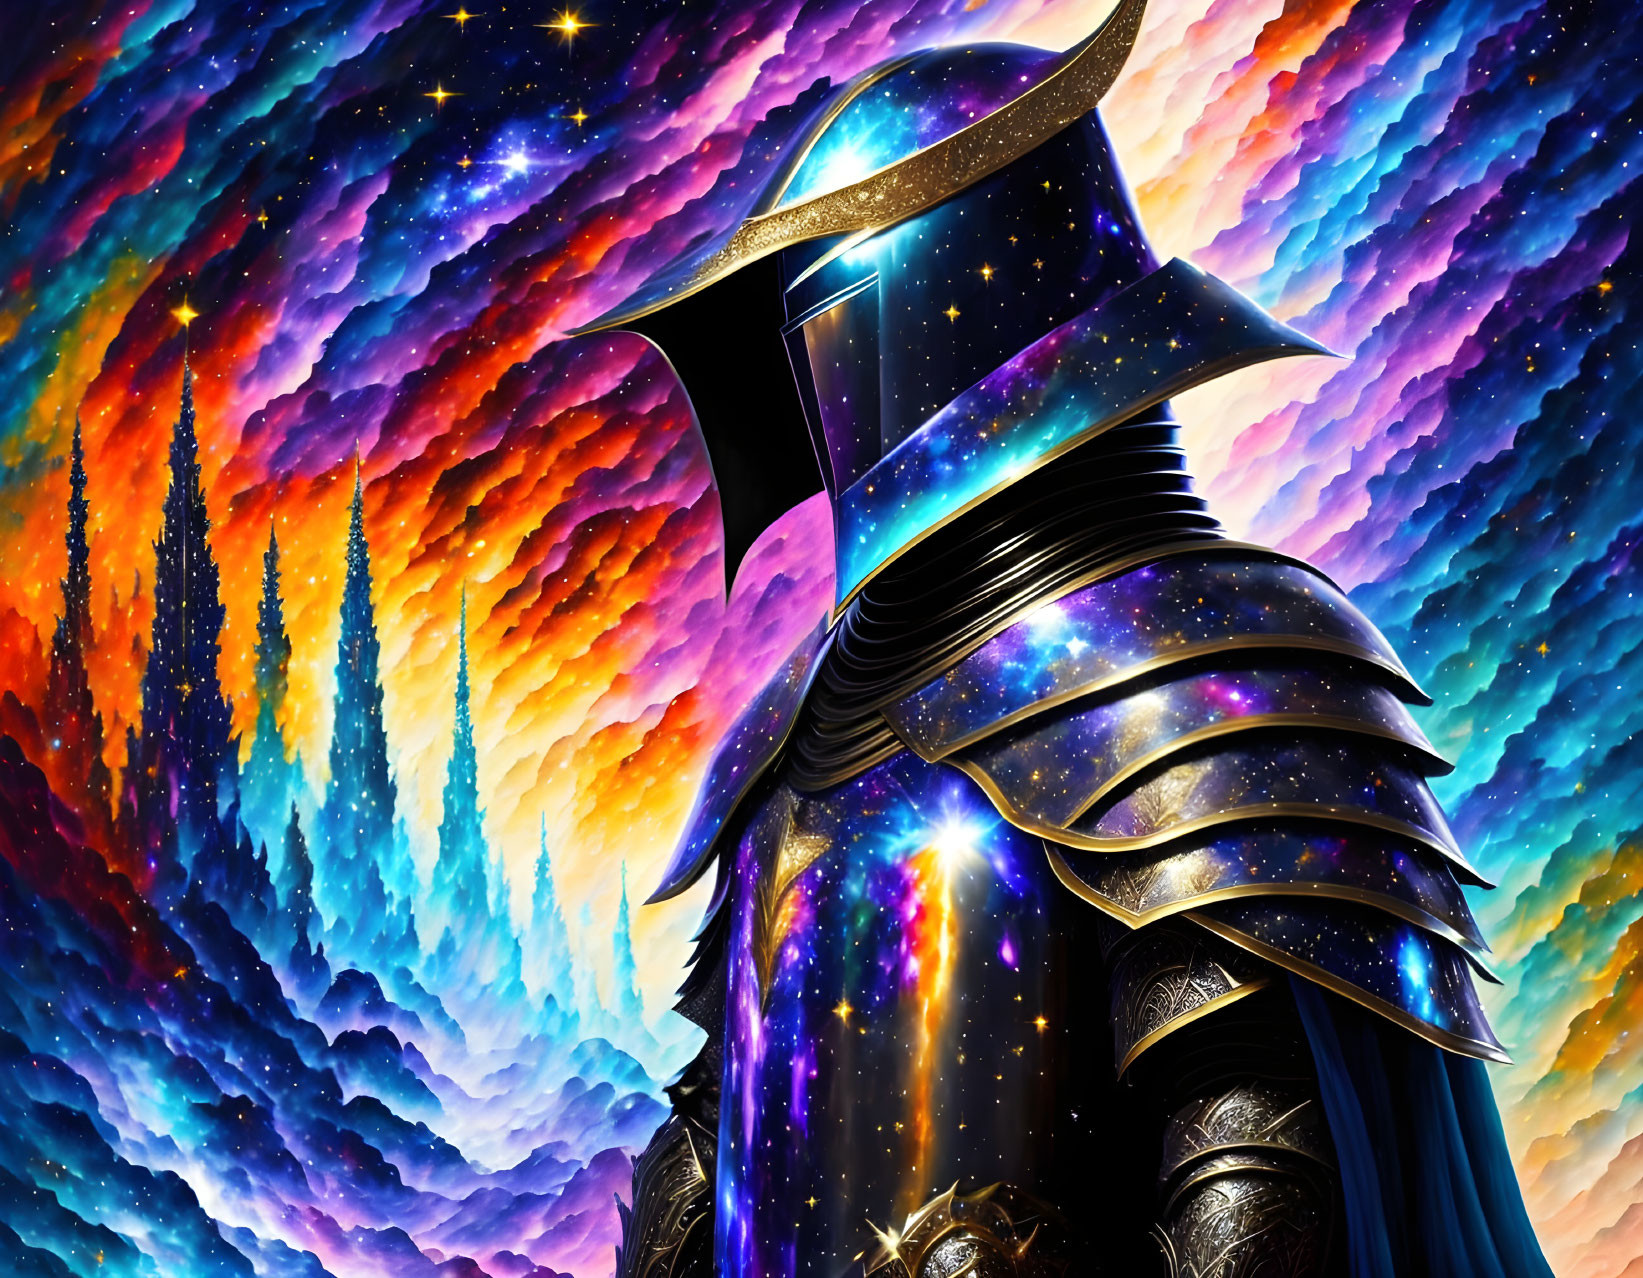 Celestial knight in shining armor against cosmic backdrop